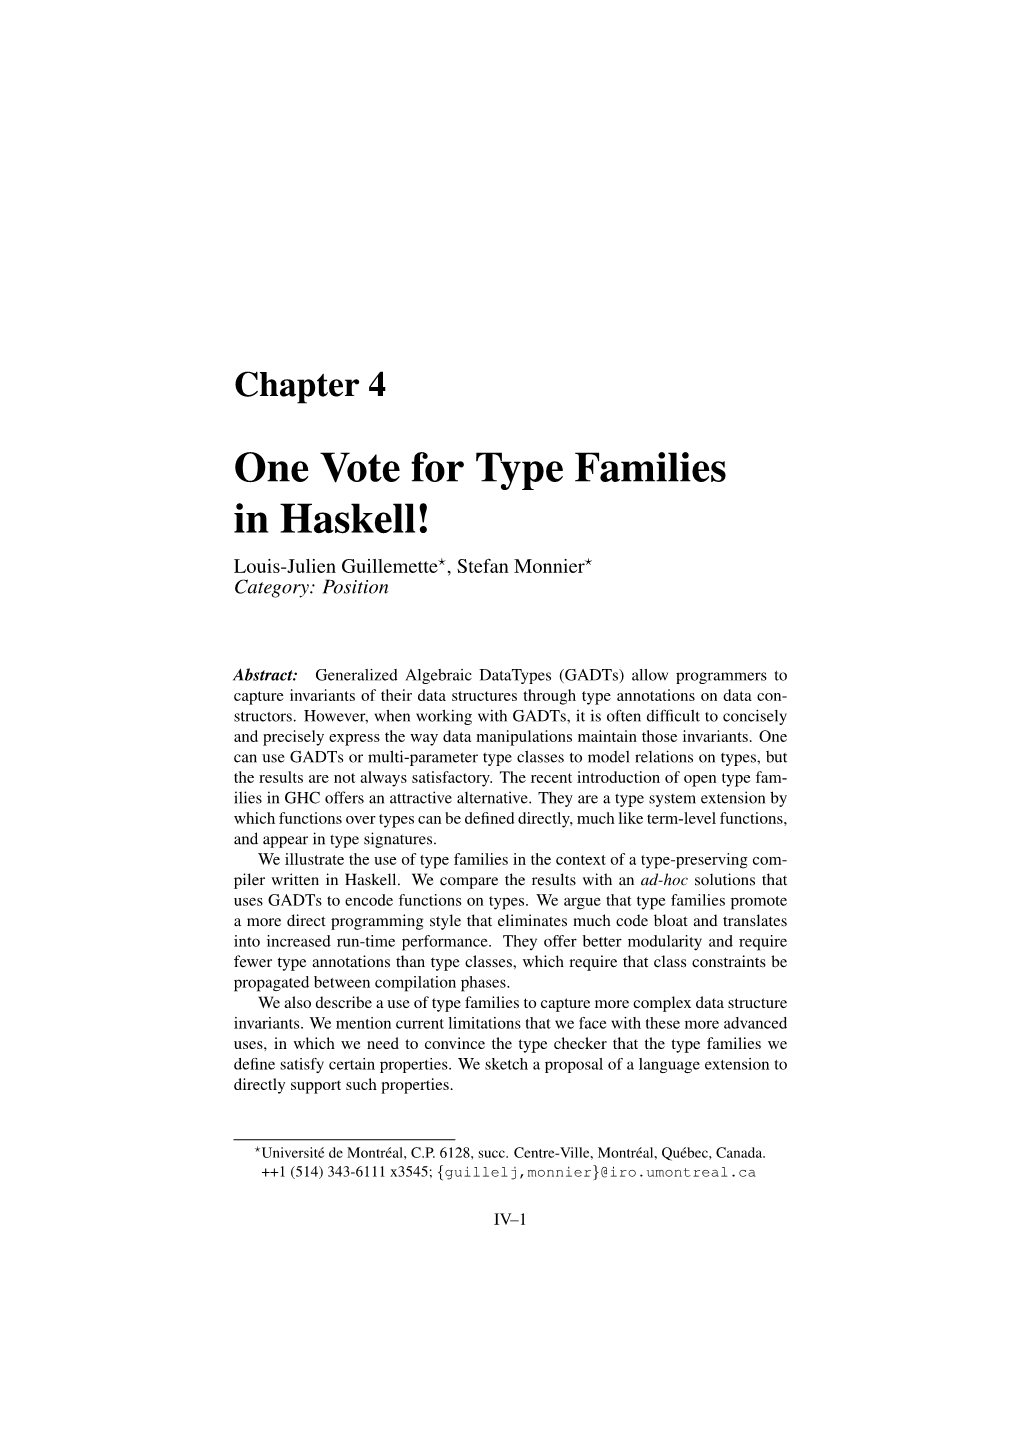 One Vote for Type Families in Haskell! Louis-Julien Guillemette?, Stefan Monnier? Category: Position